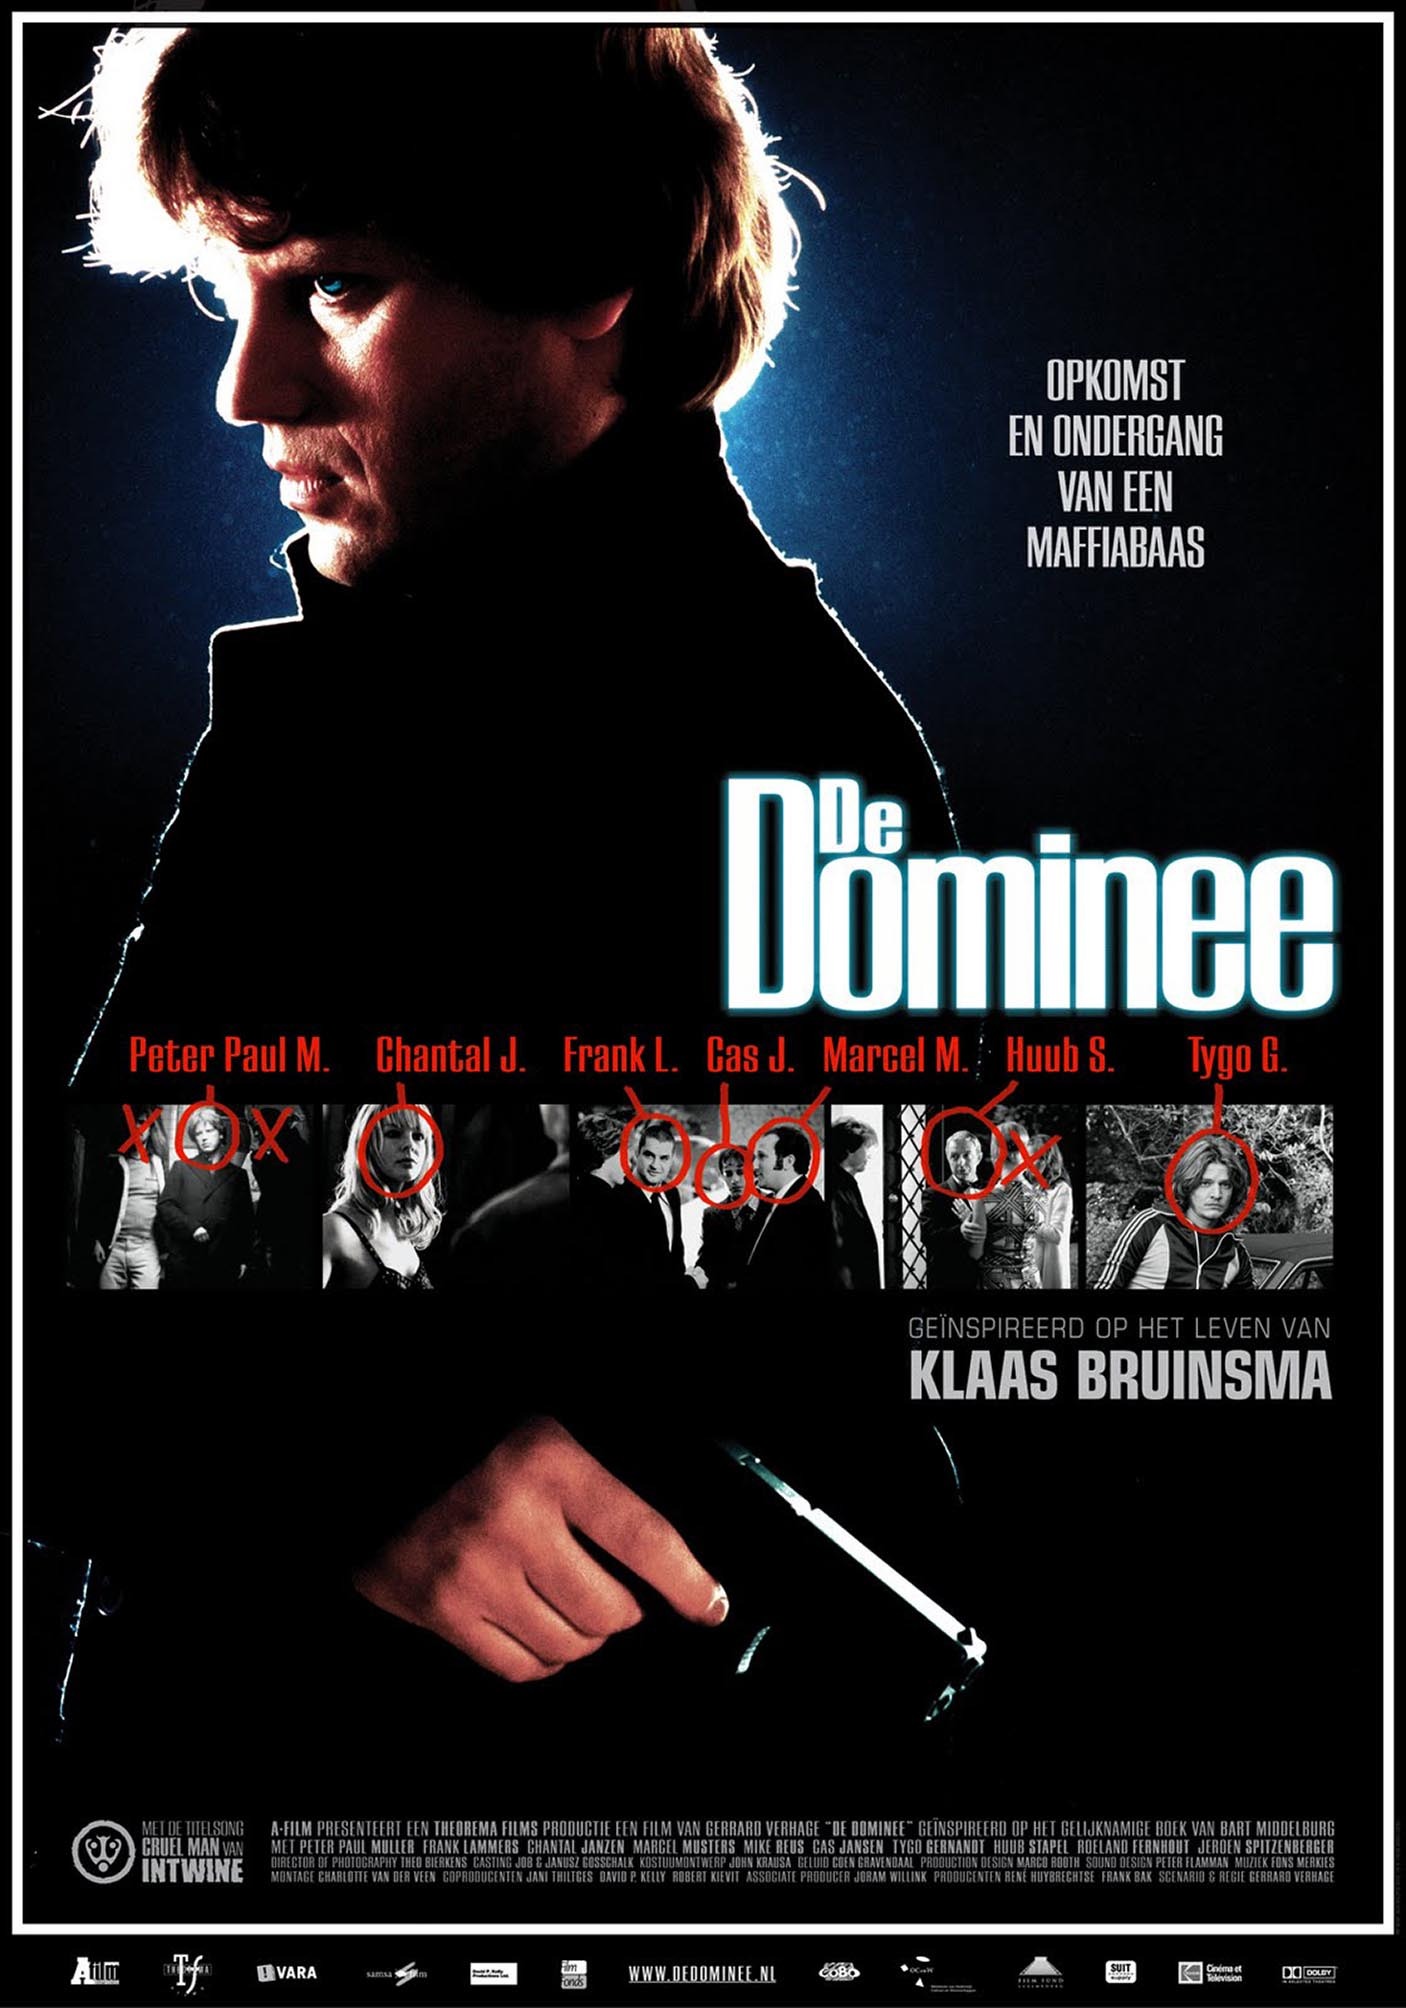 Mega Sized Movie Poster Image for De dominee 